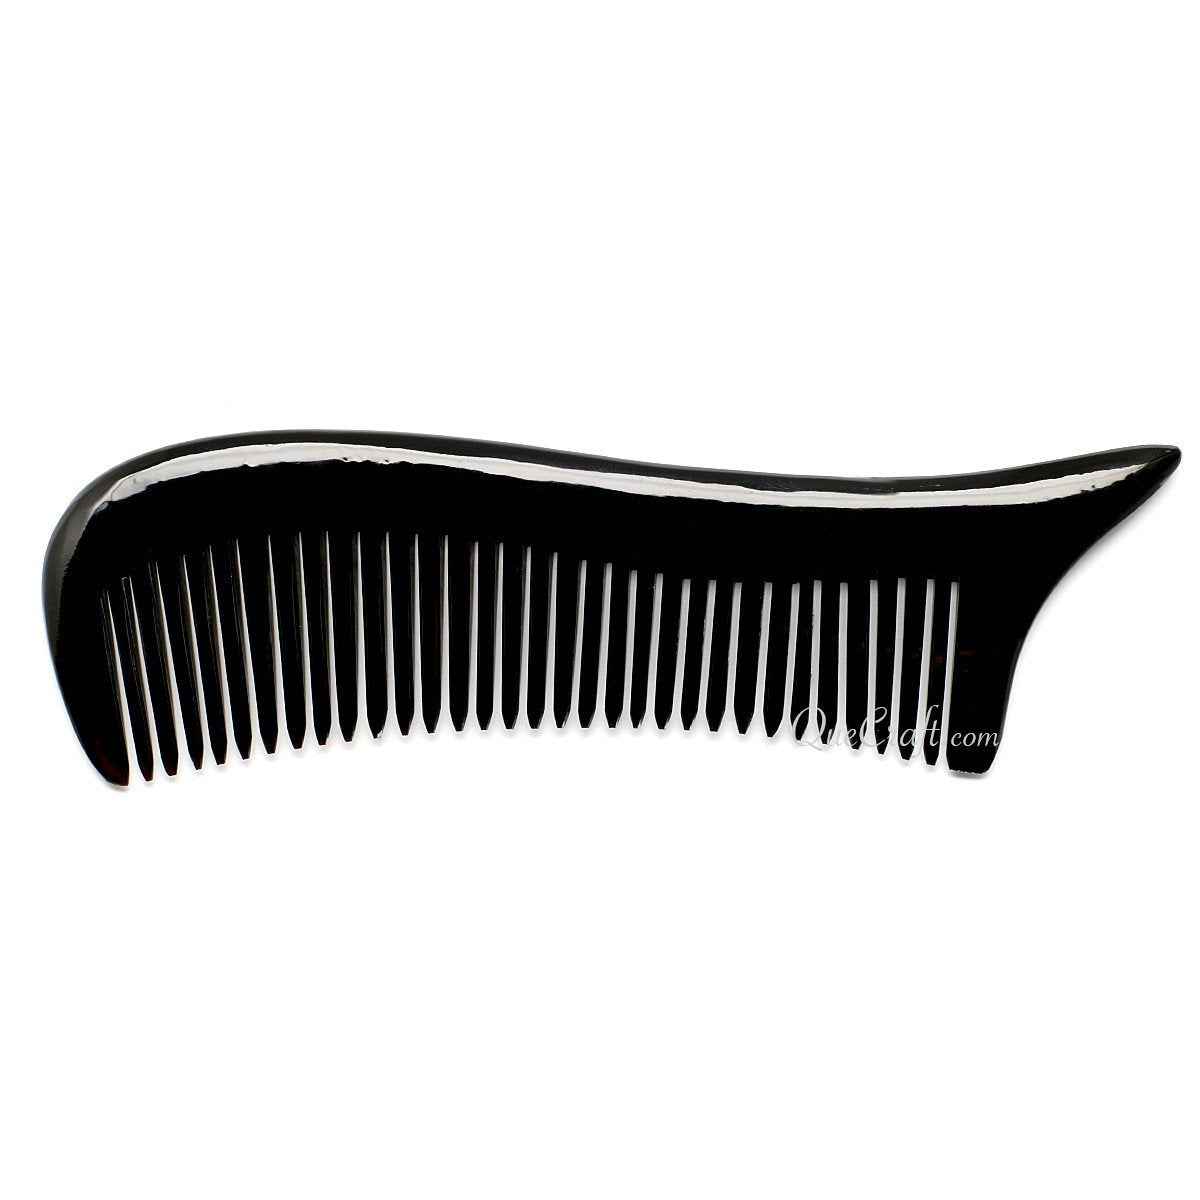 Horn Hair Comb #10684 - HORN JEWELRY